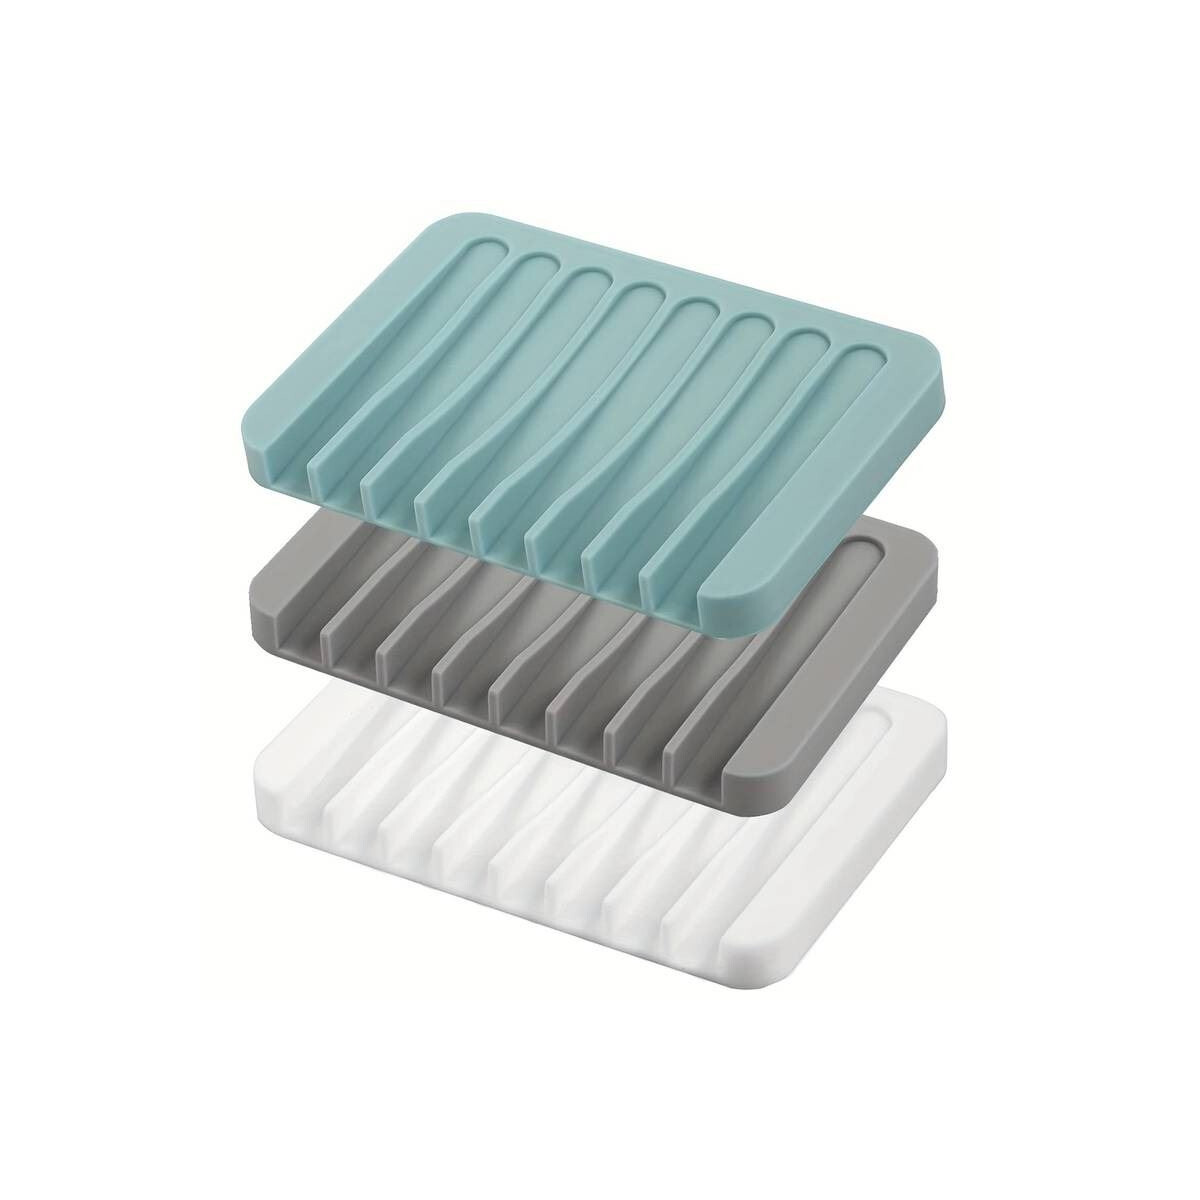 Flexible gray silicone tray